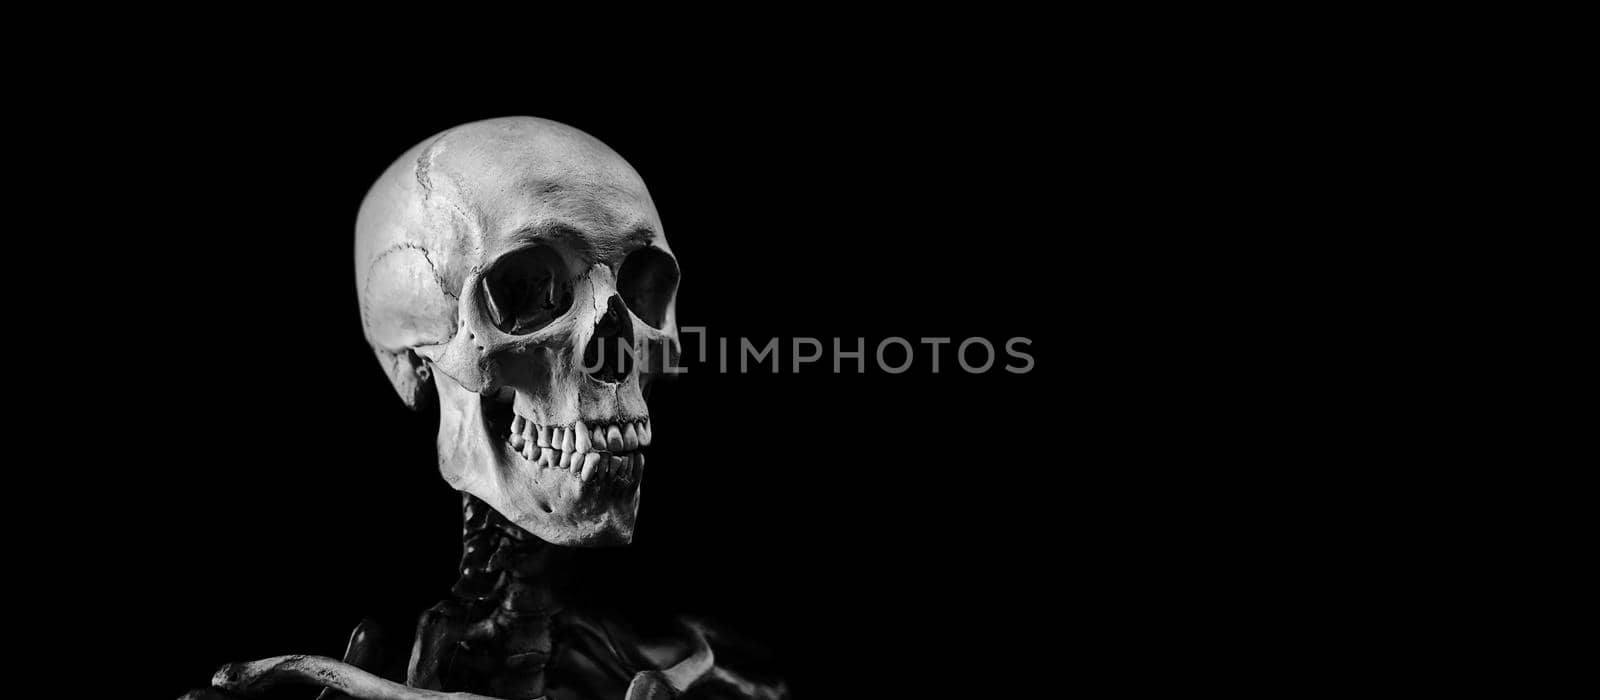 Skeleton of a man on a black background. A real human skeleton.